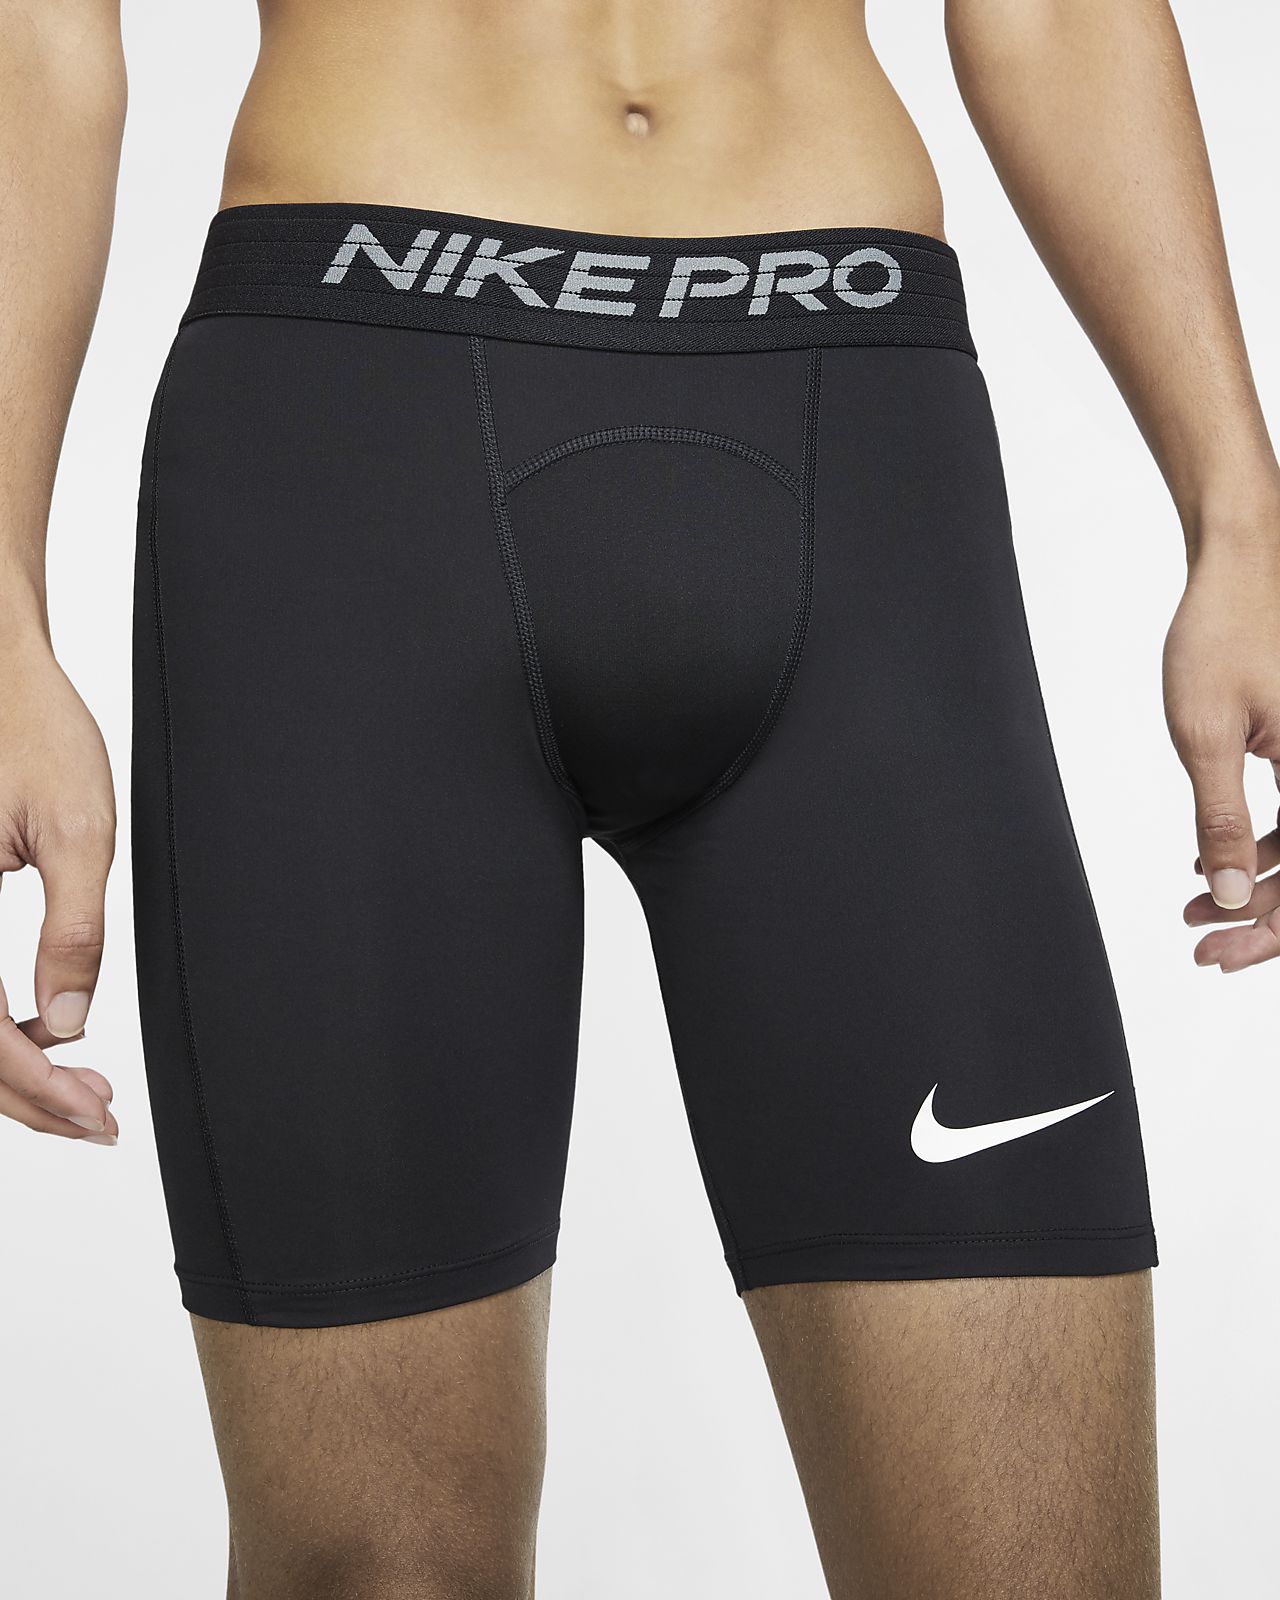 nike pro shorts clearance